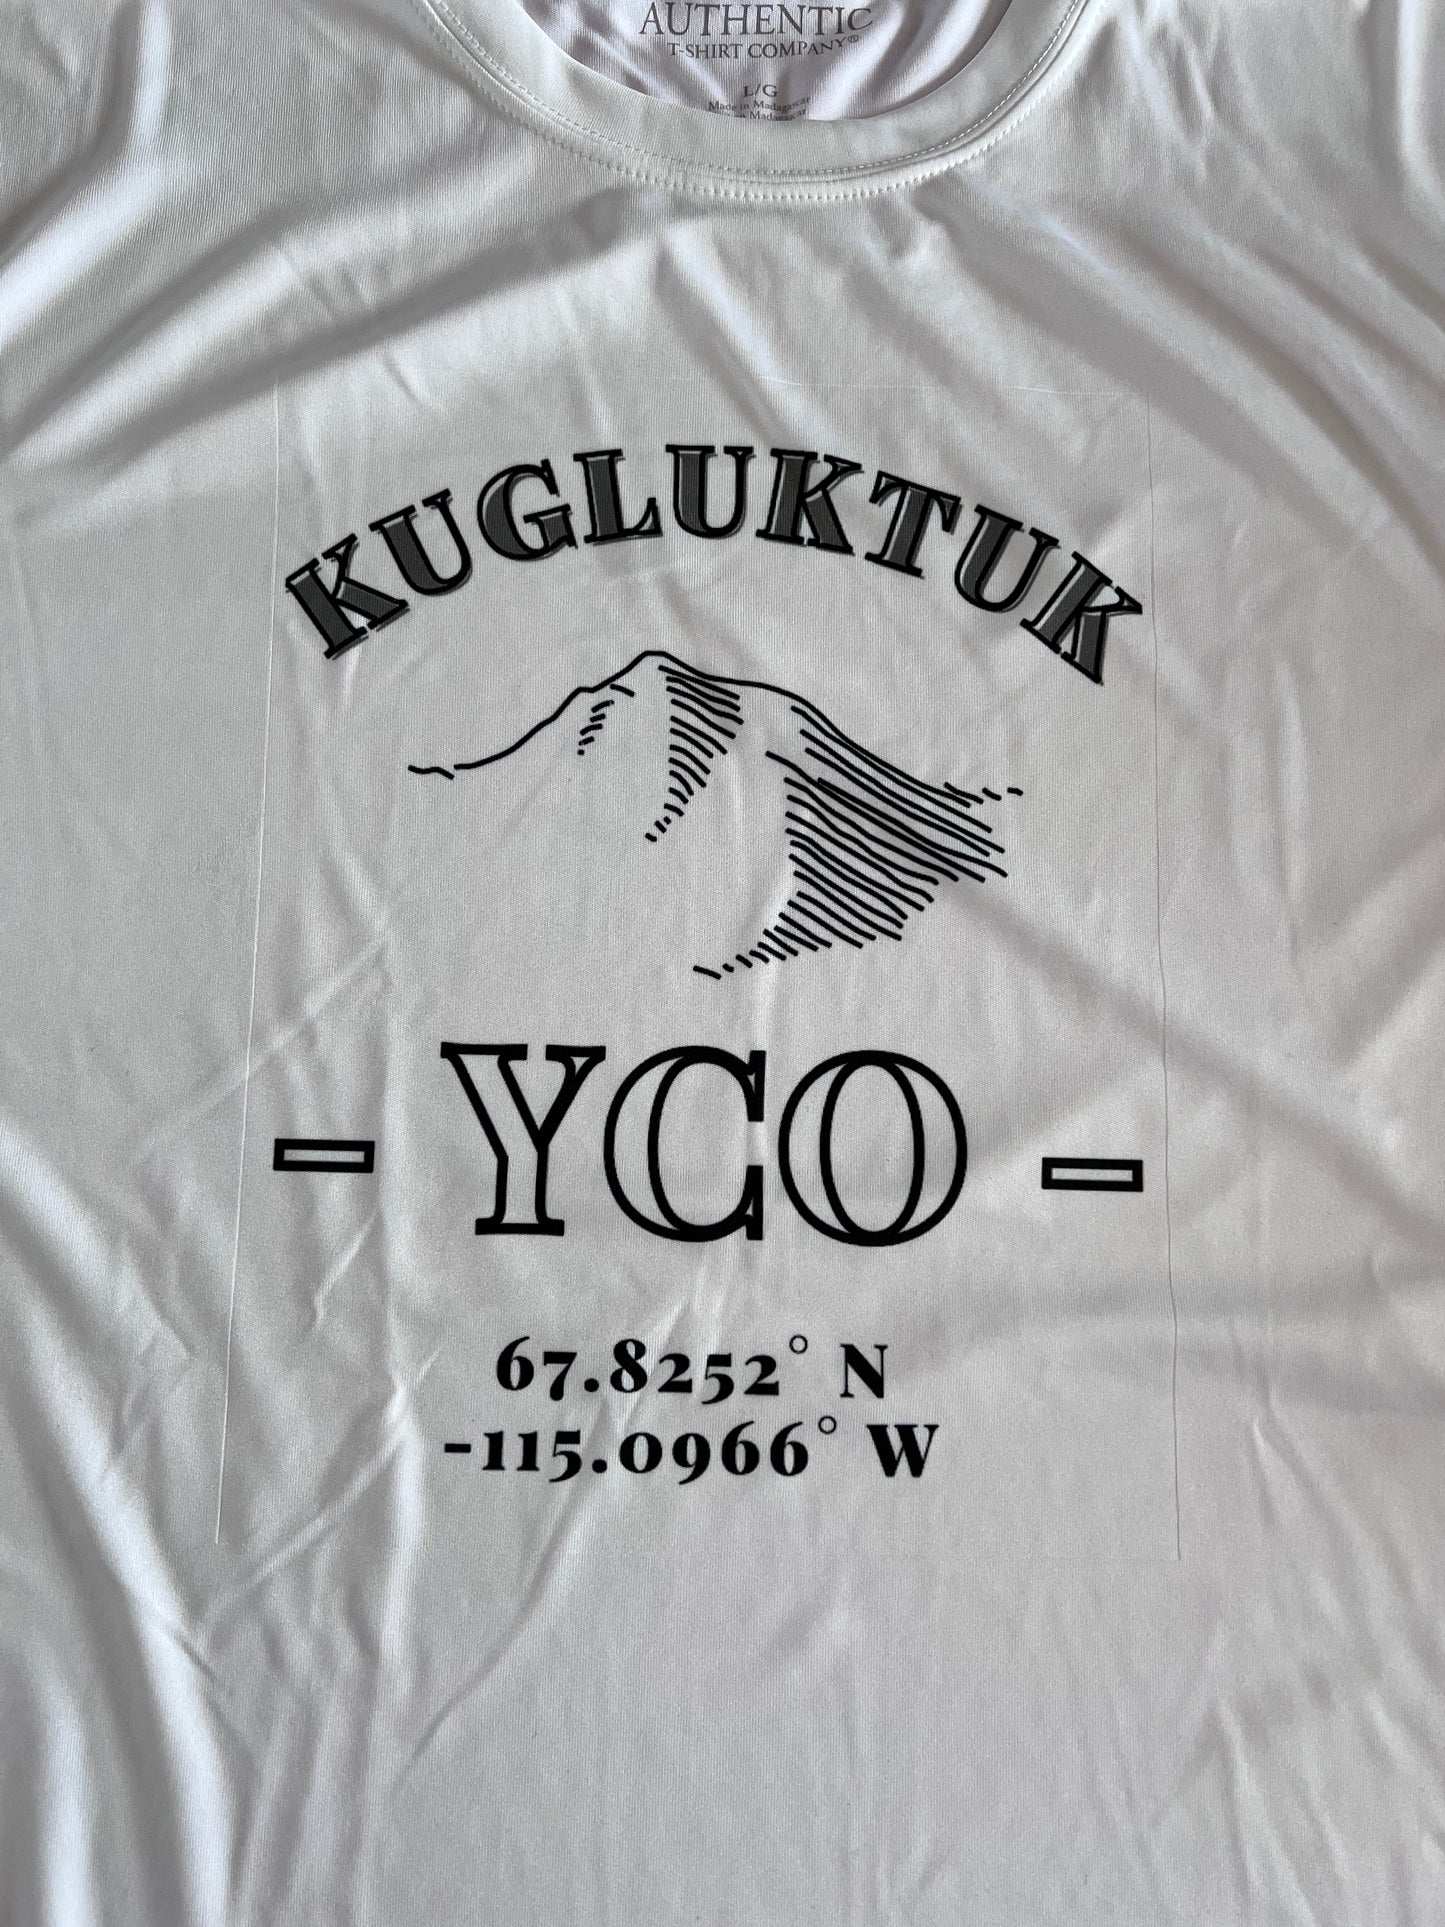 Adult White Kugluktuk Shaded Hills Printed T-Shirt